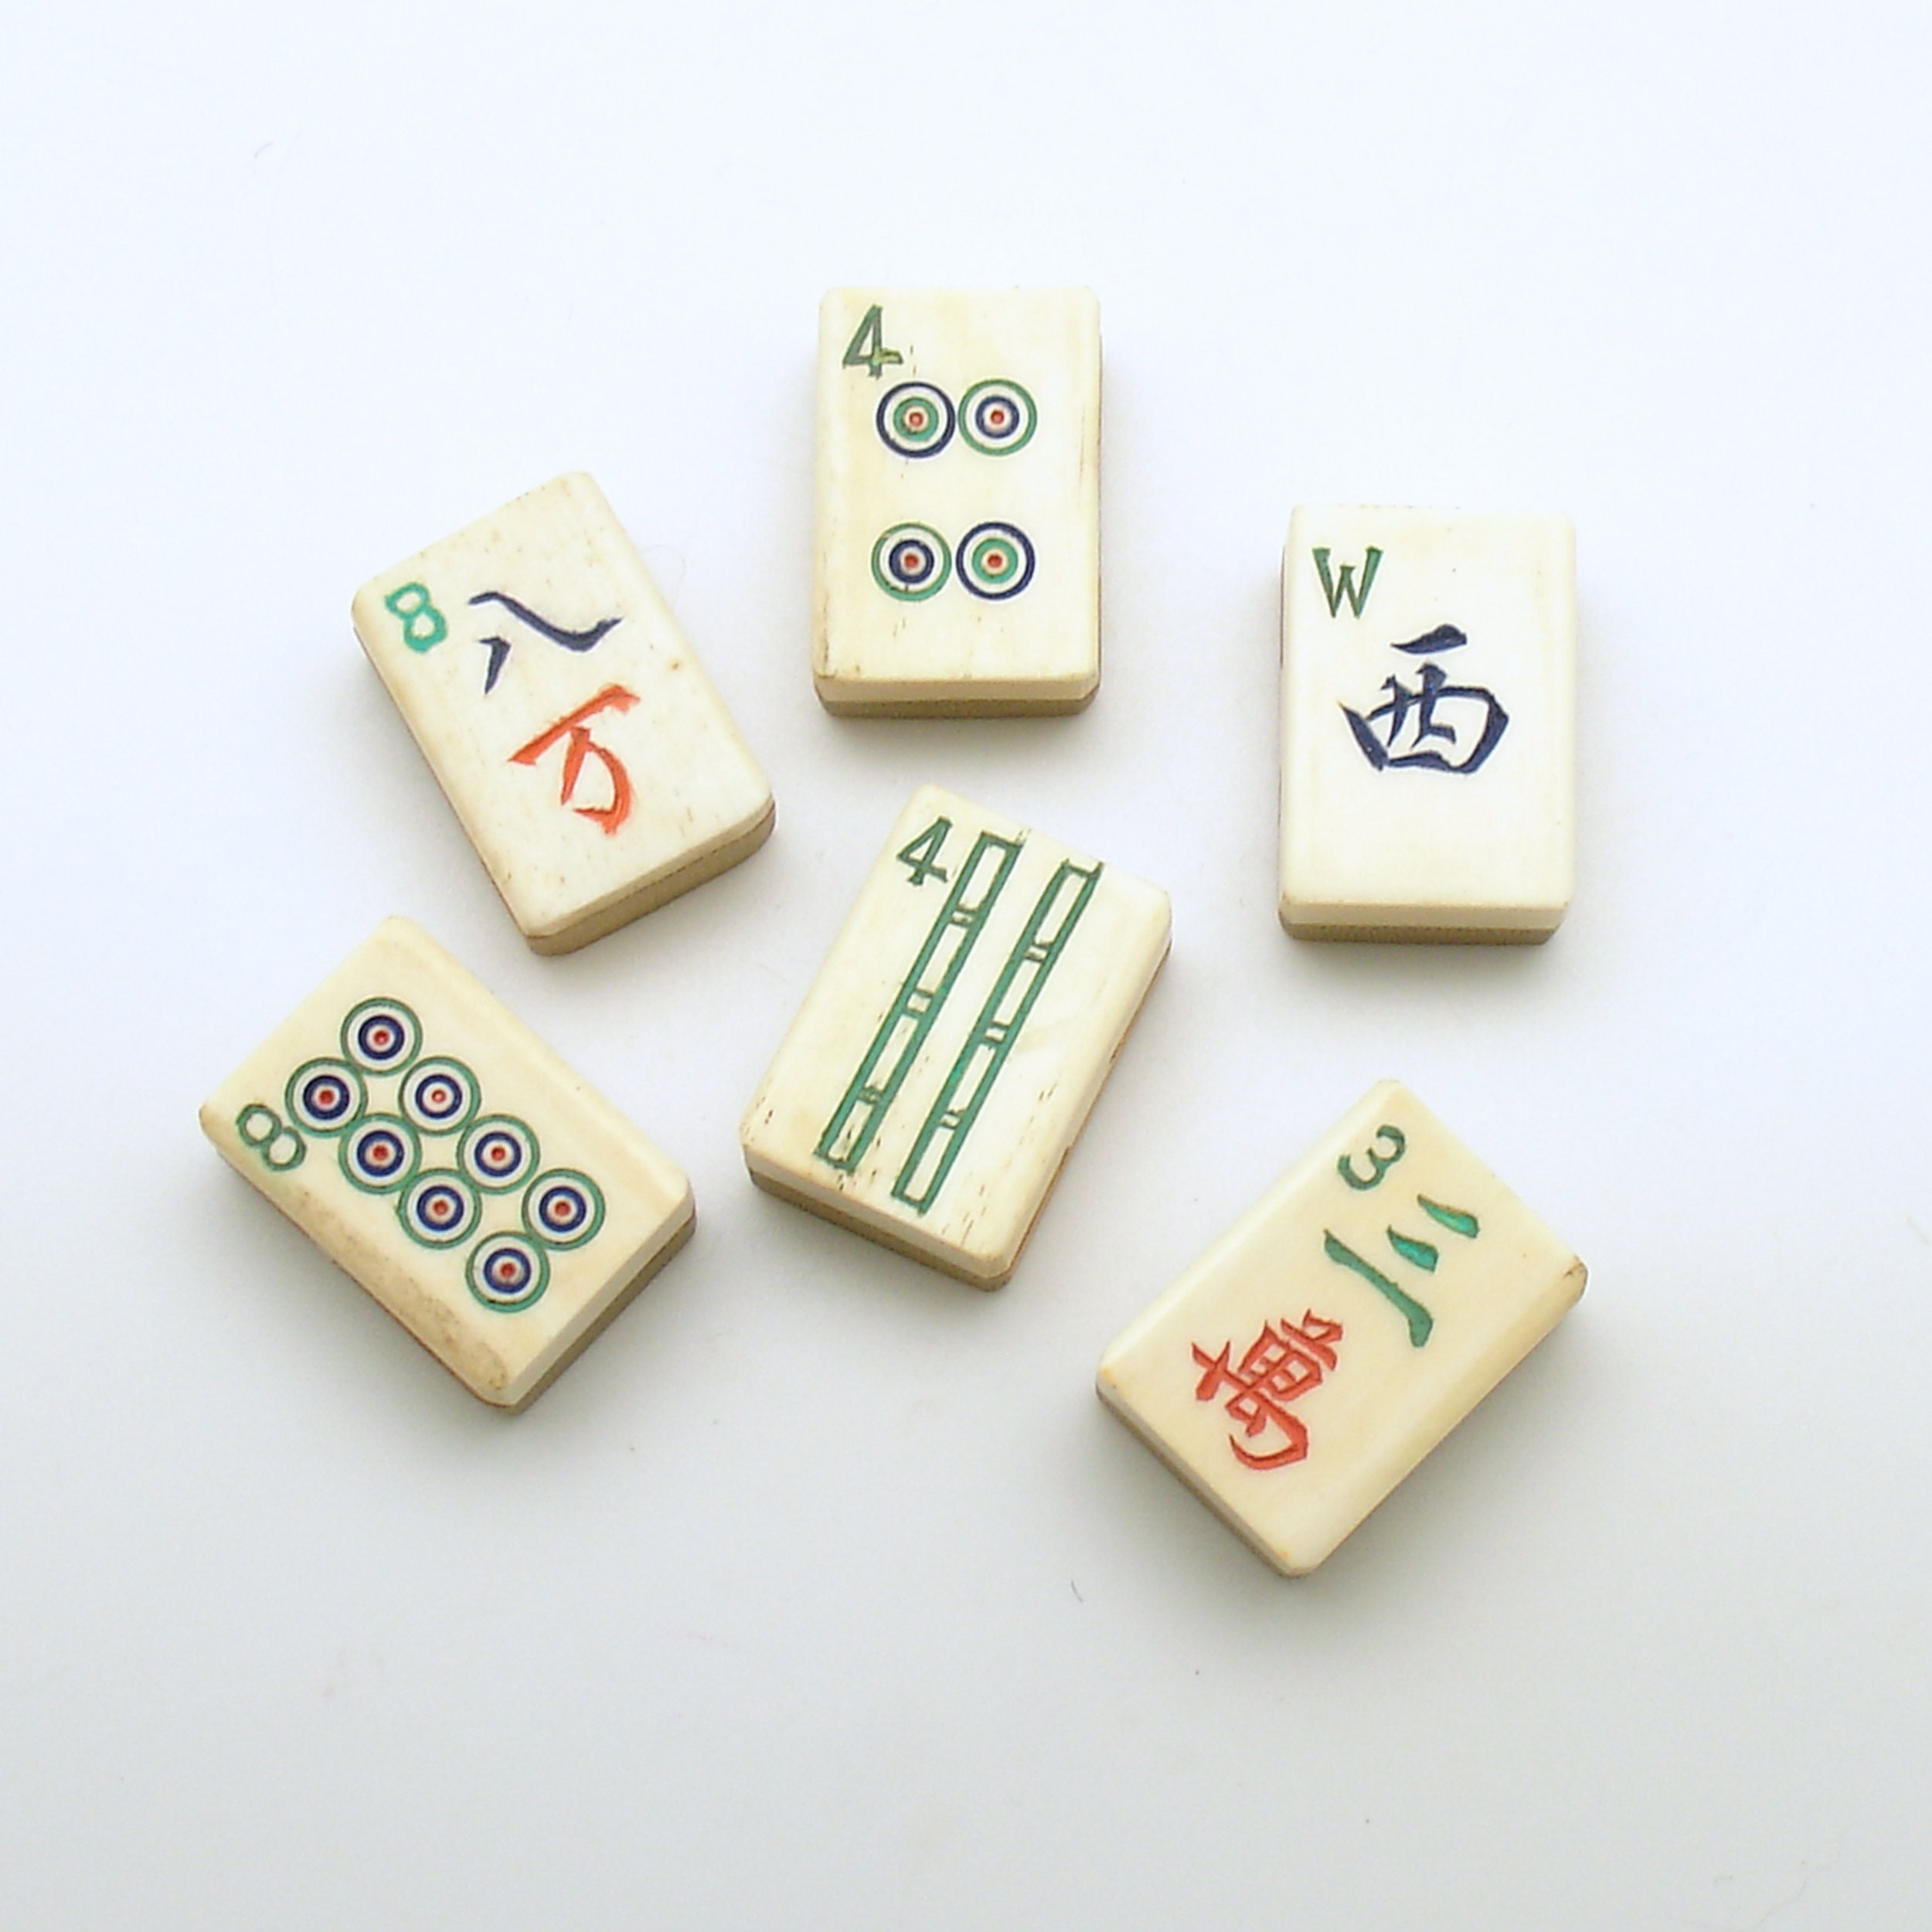 Vintage Bone and Bamboo Mahjong or Mah-jongg Playing Tiles in Box. Stock  Image - Image of character, activity: 213577537